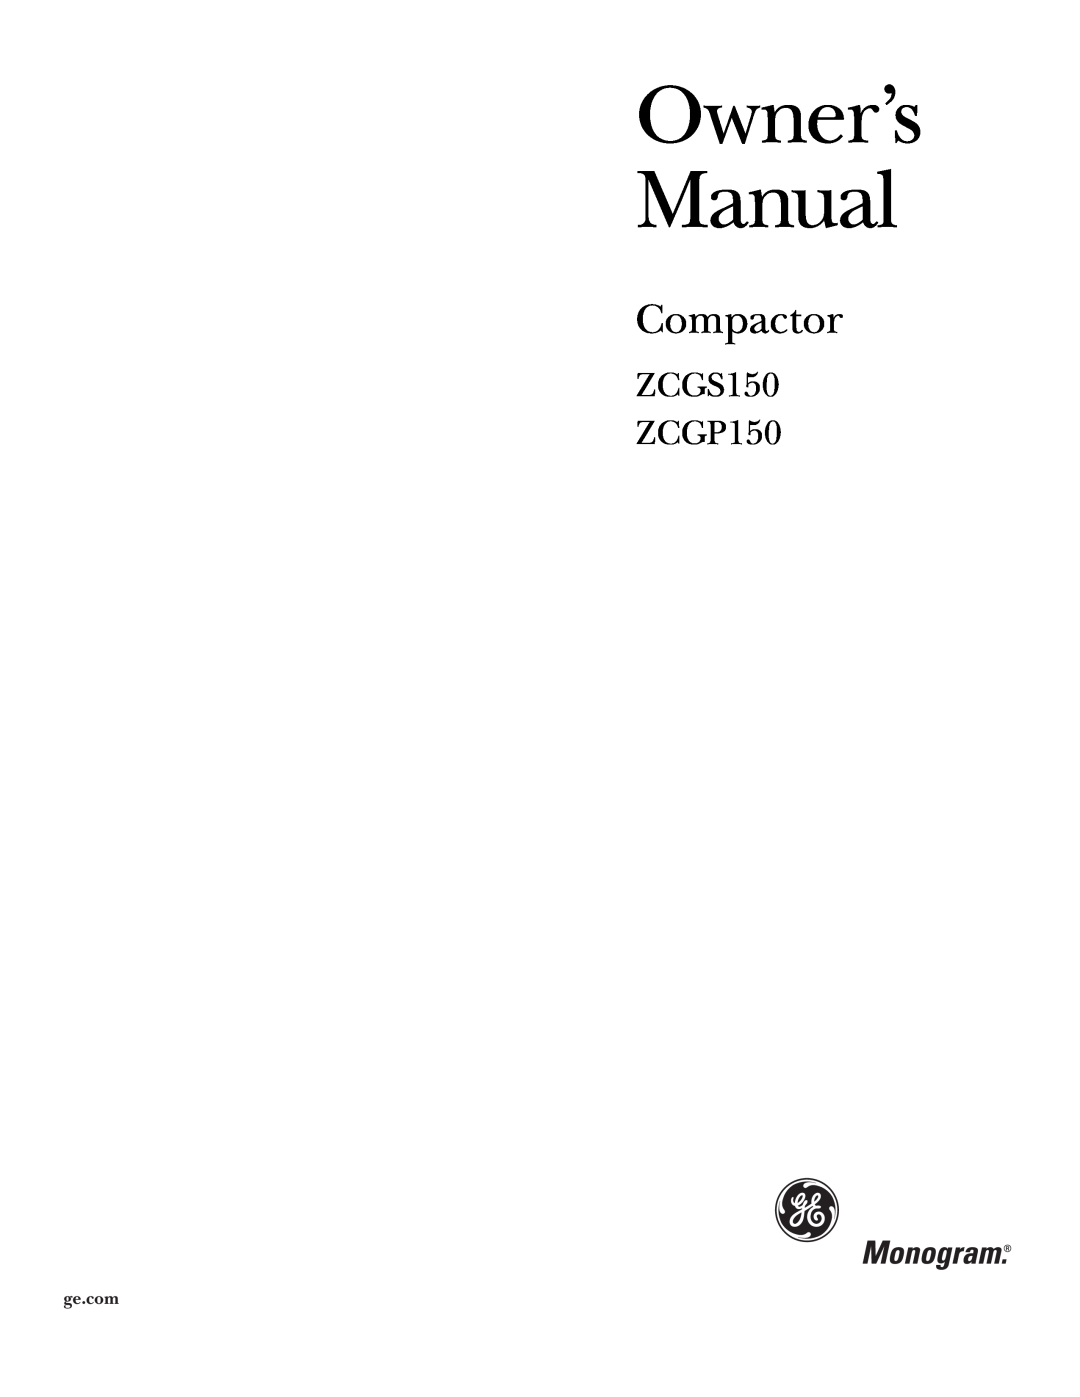 GE Monogram manual Compactor, ZCGS150 ZCGP150, ge.com 